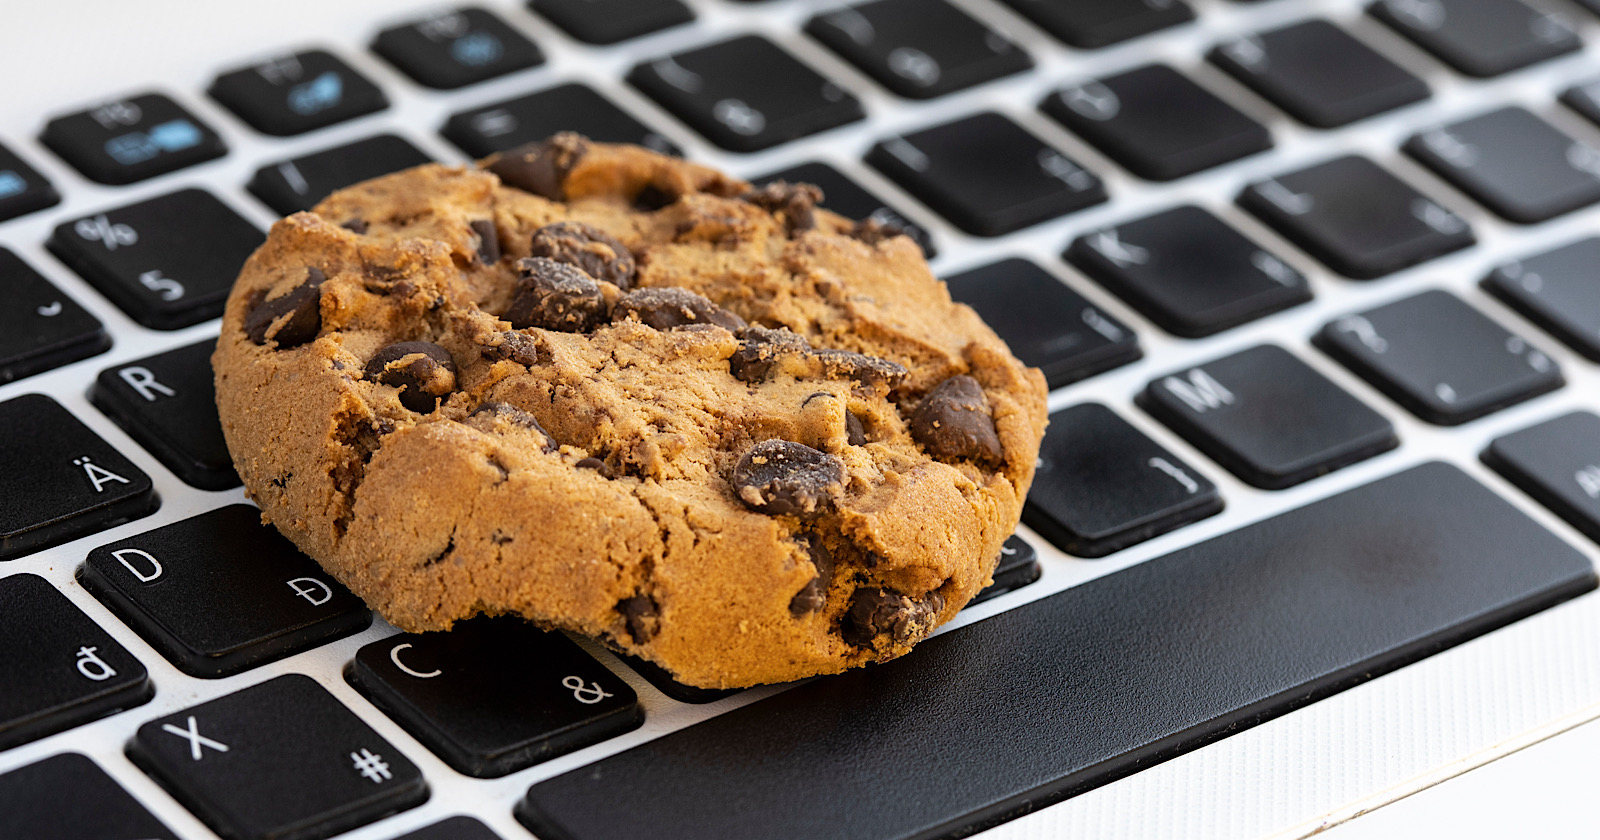 Chocolate cake cookie on keyboard symbol of internet cookies